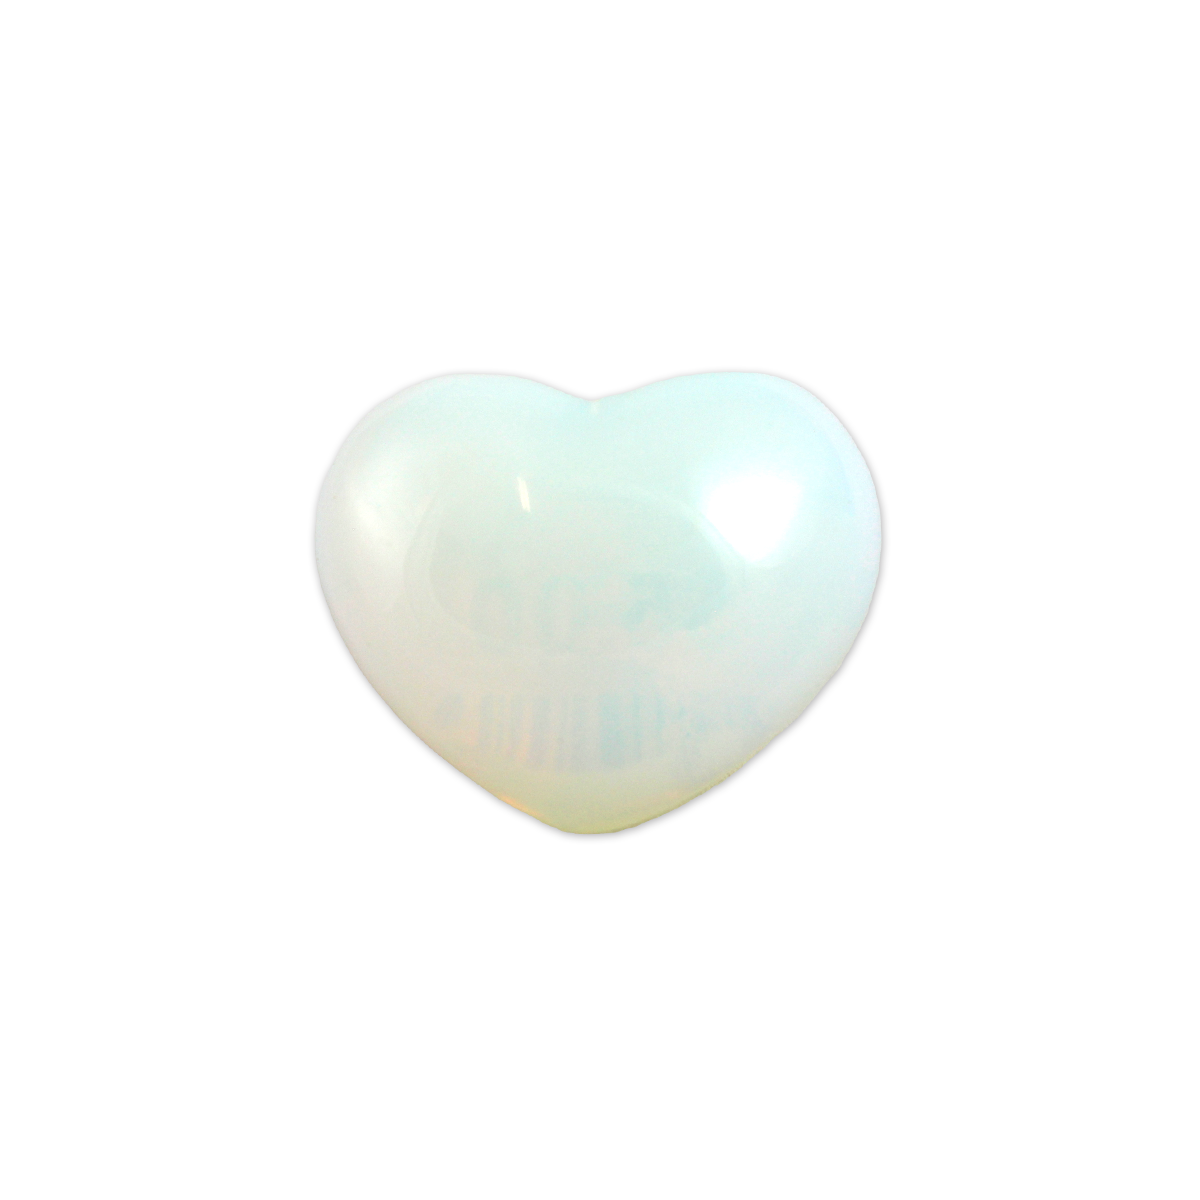 Small heart-shaped Opalite